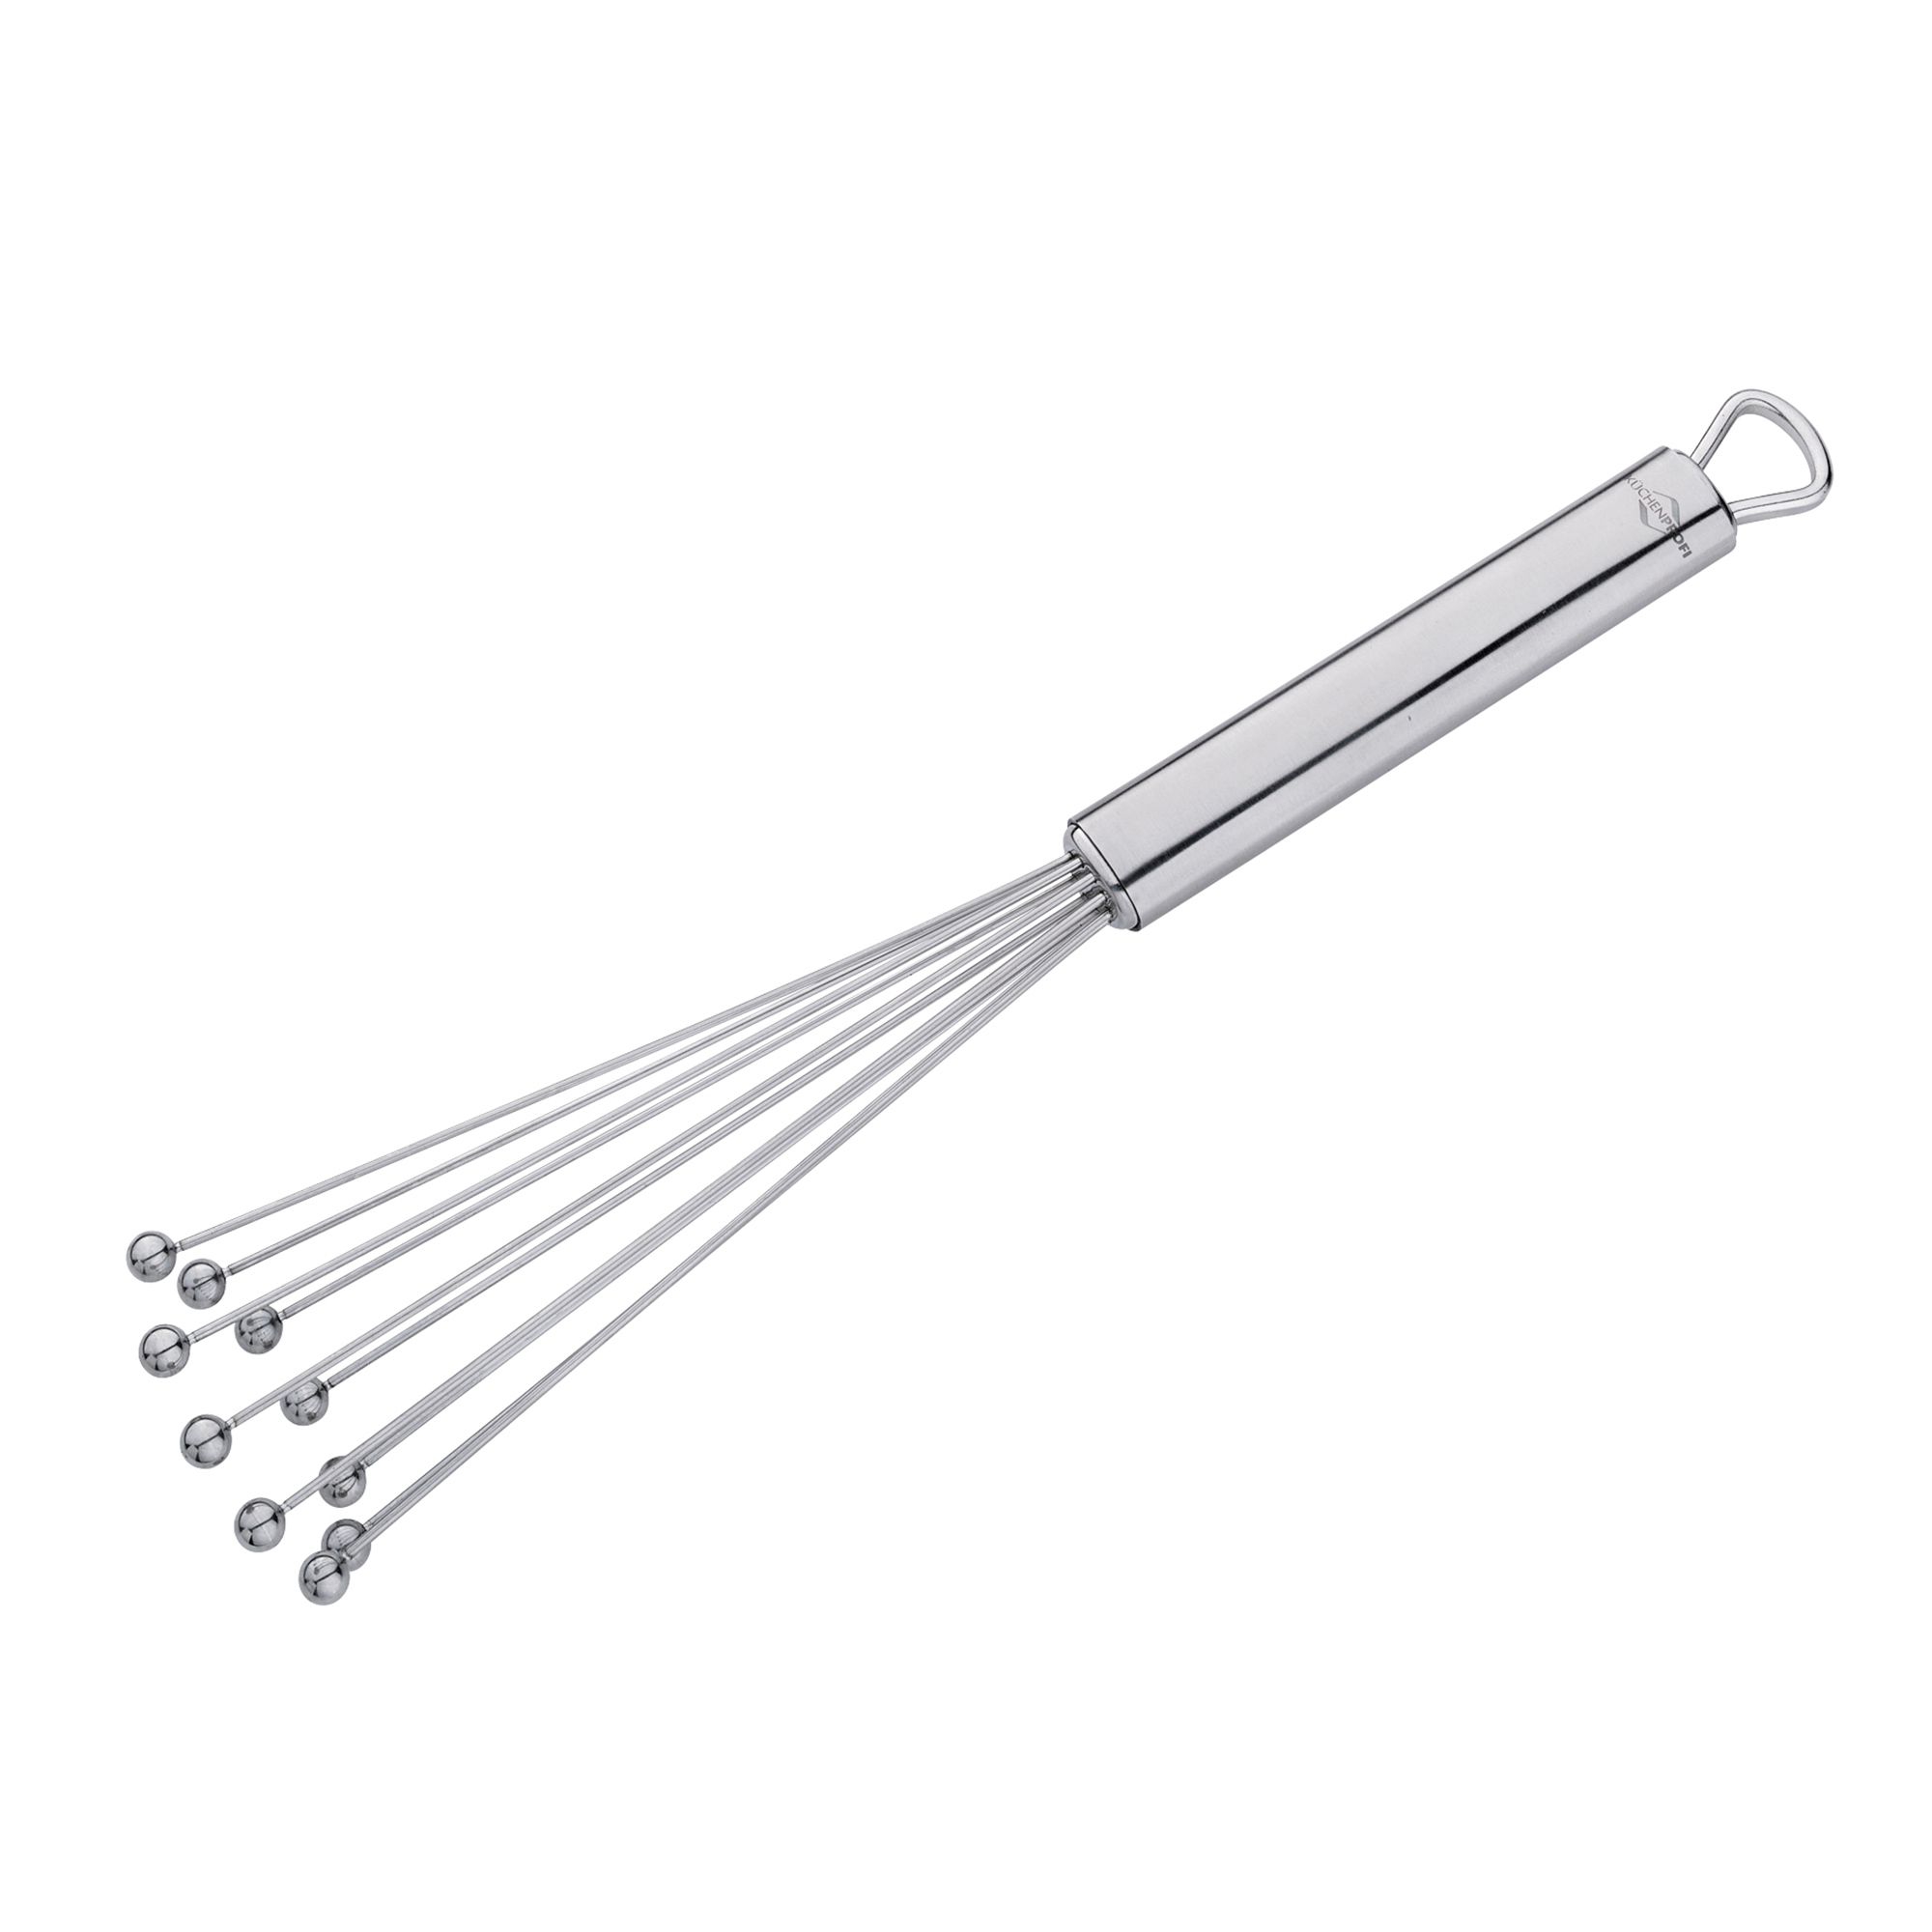 Küchenprofi - PARMA - Nylon spatula, perforated